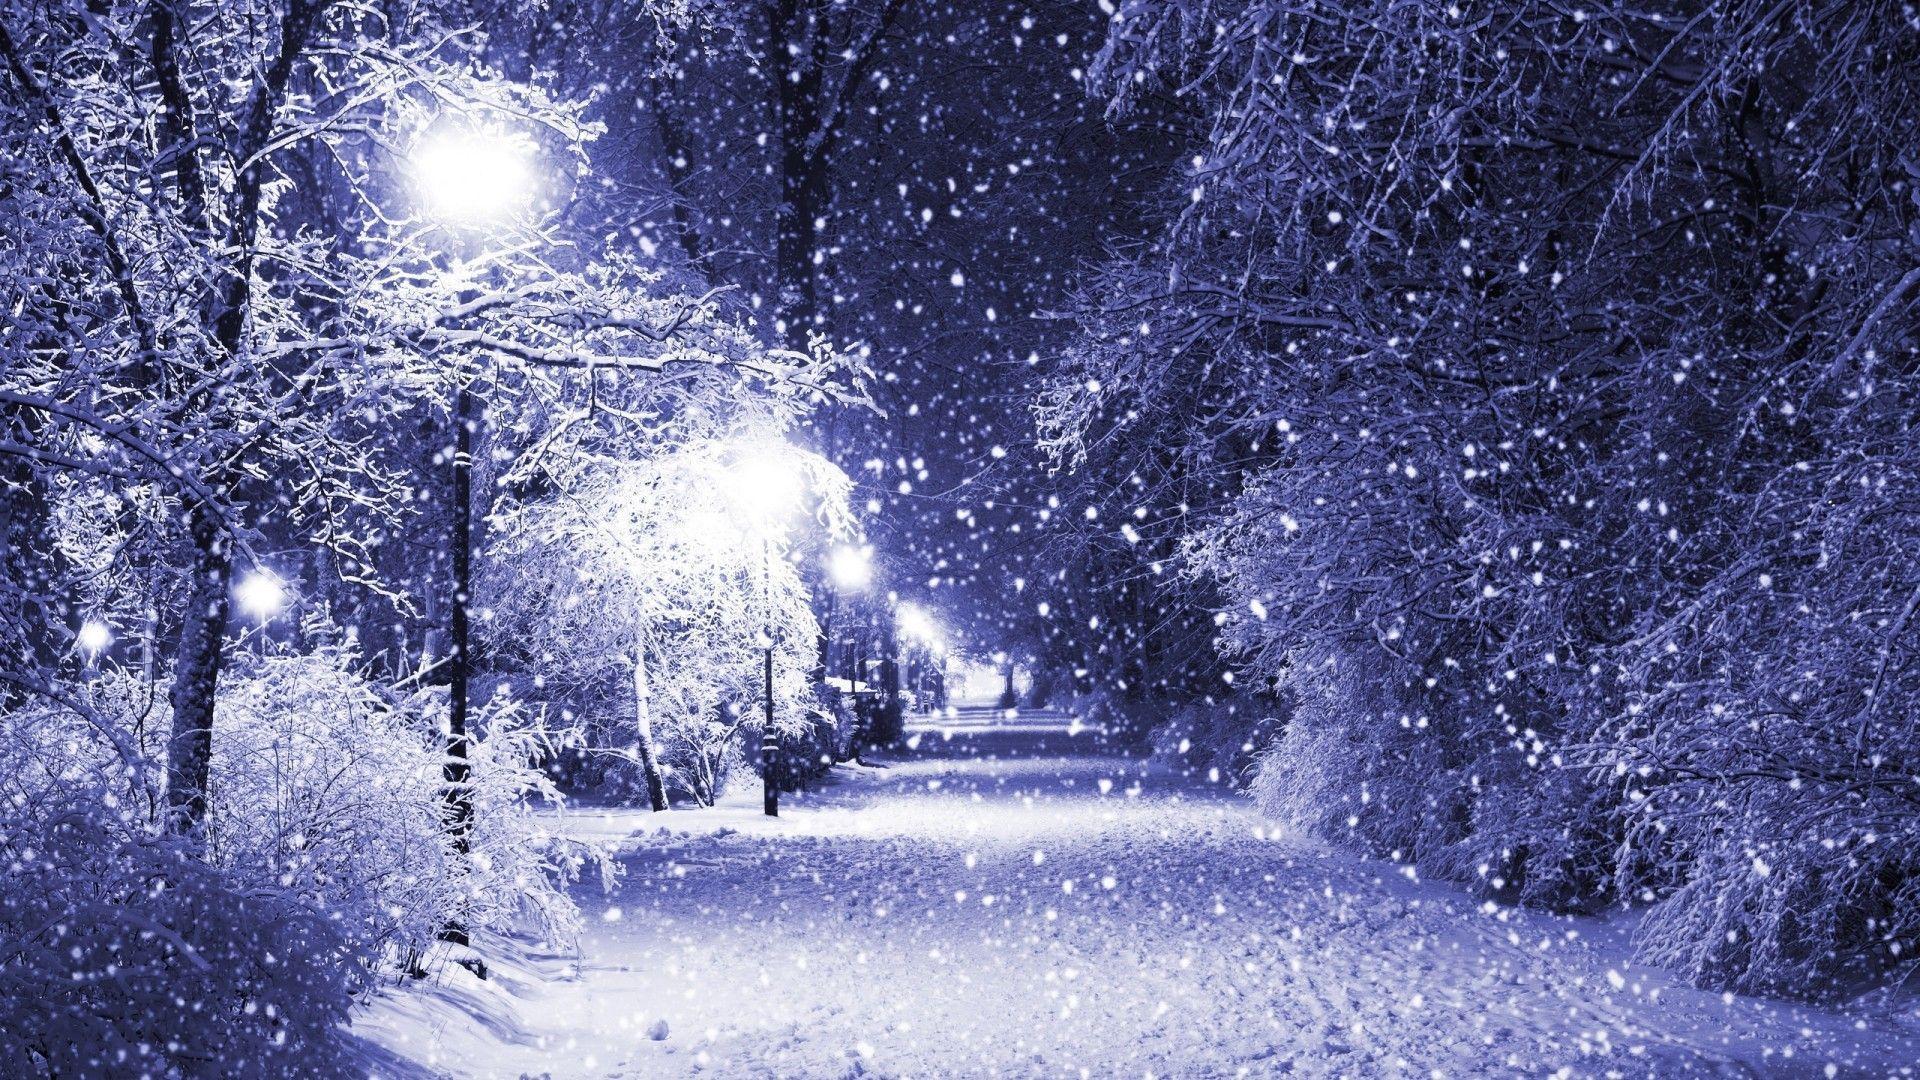 Winter Snow Background